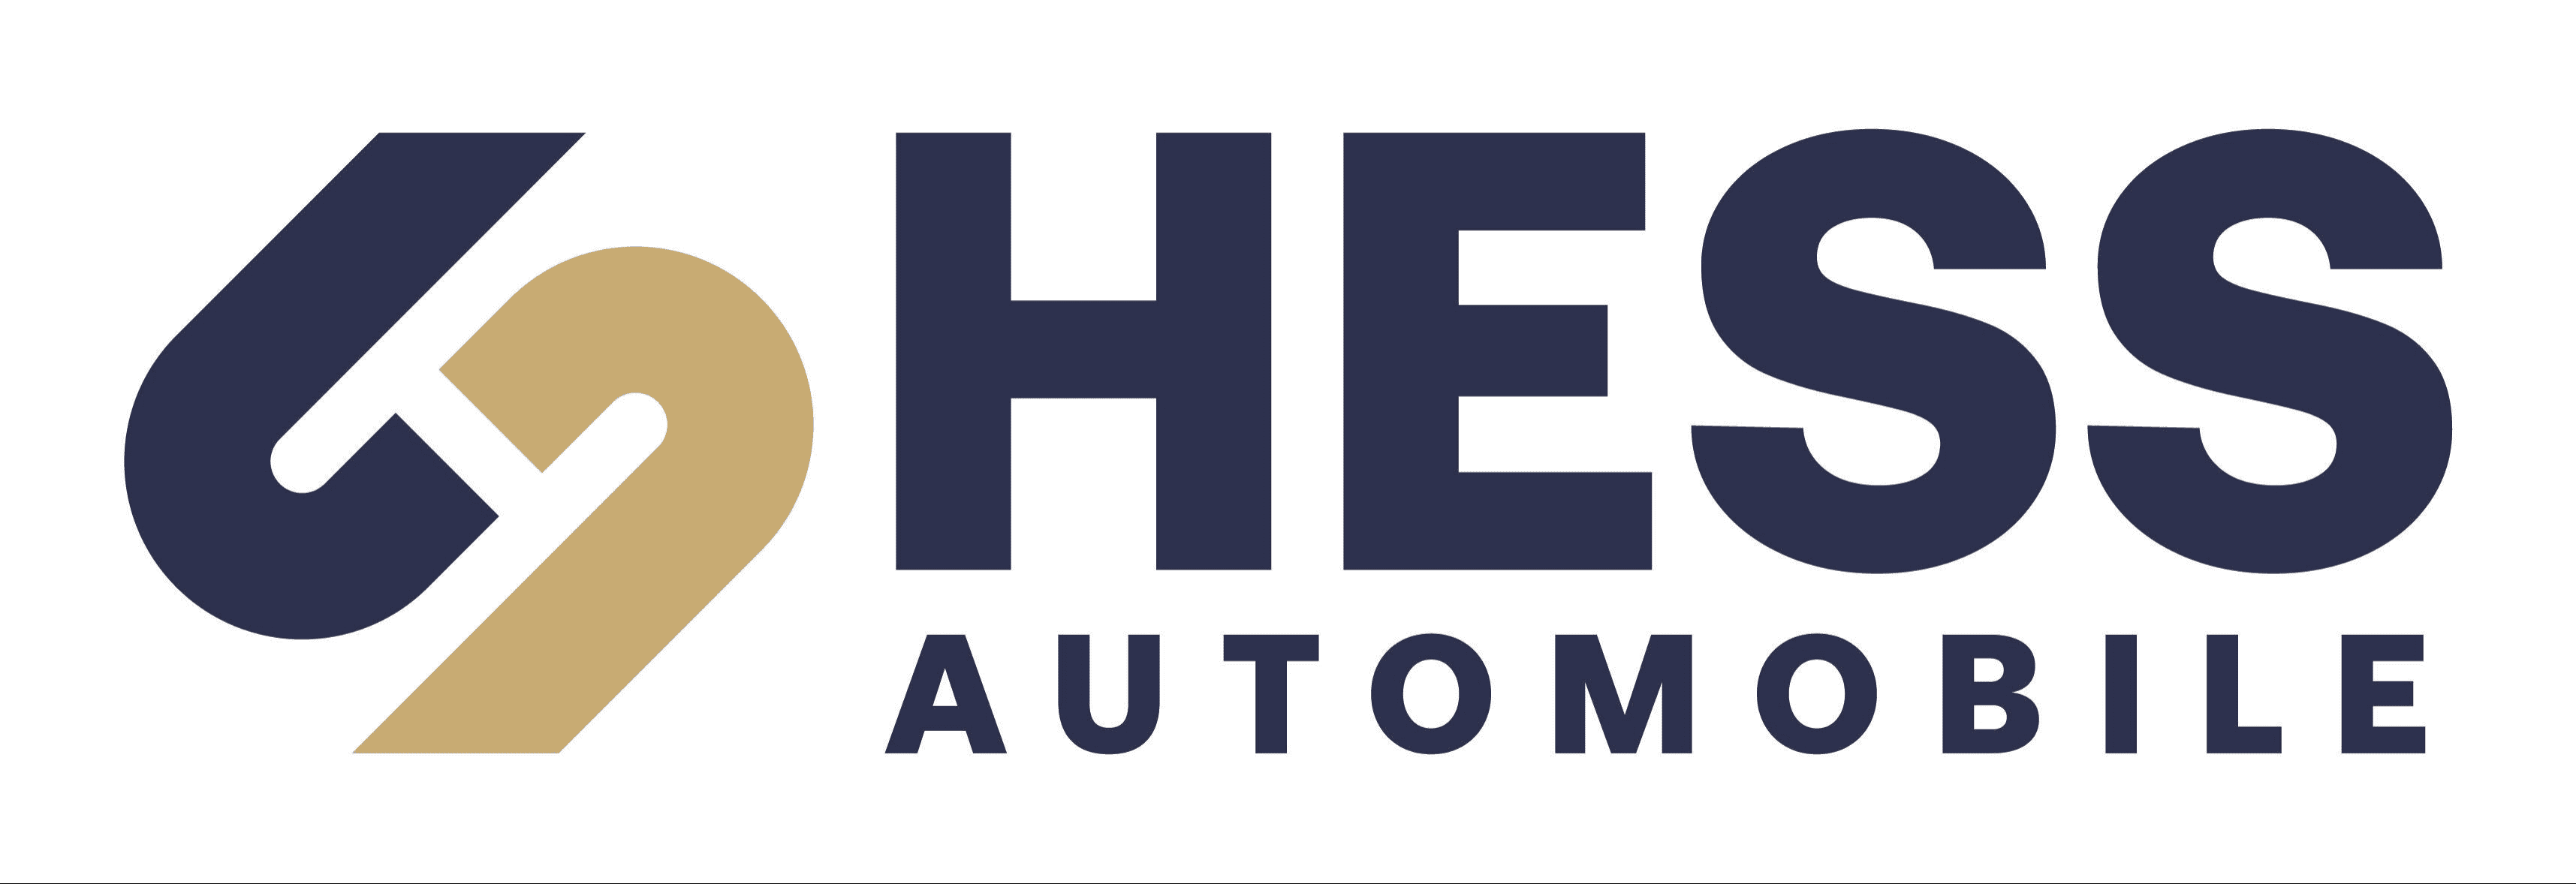 Hess Automobile